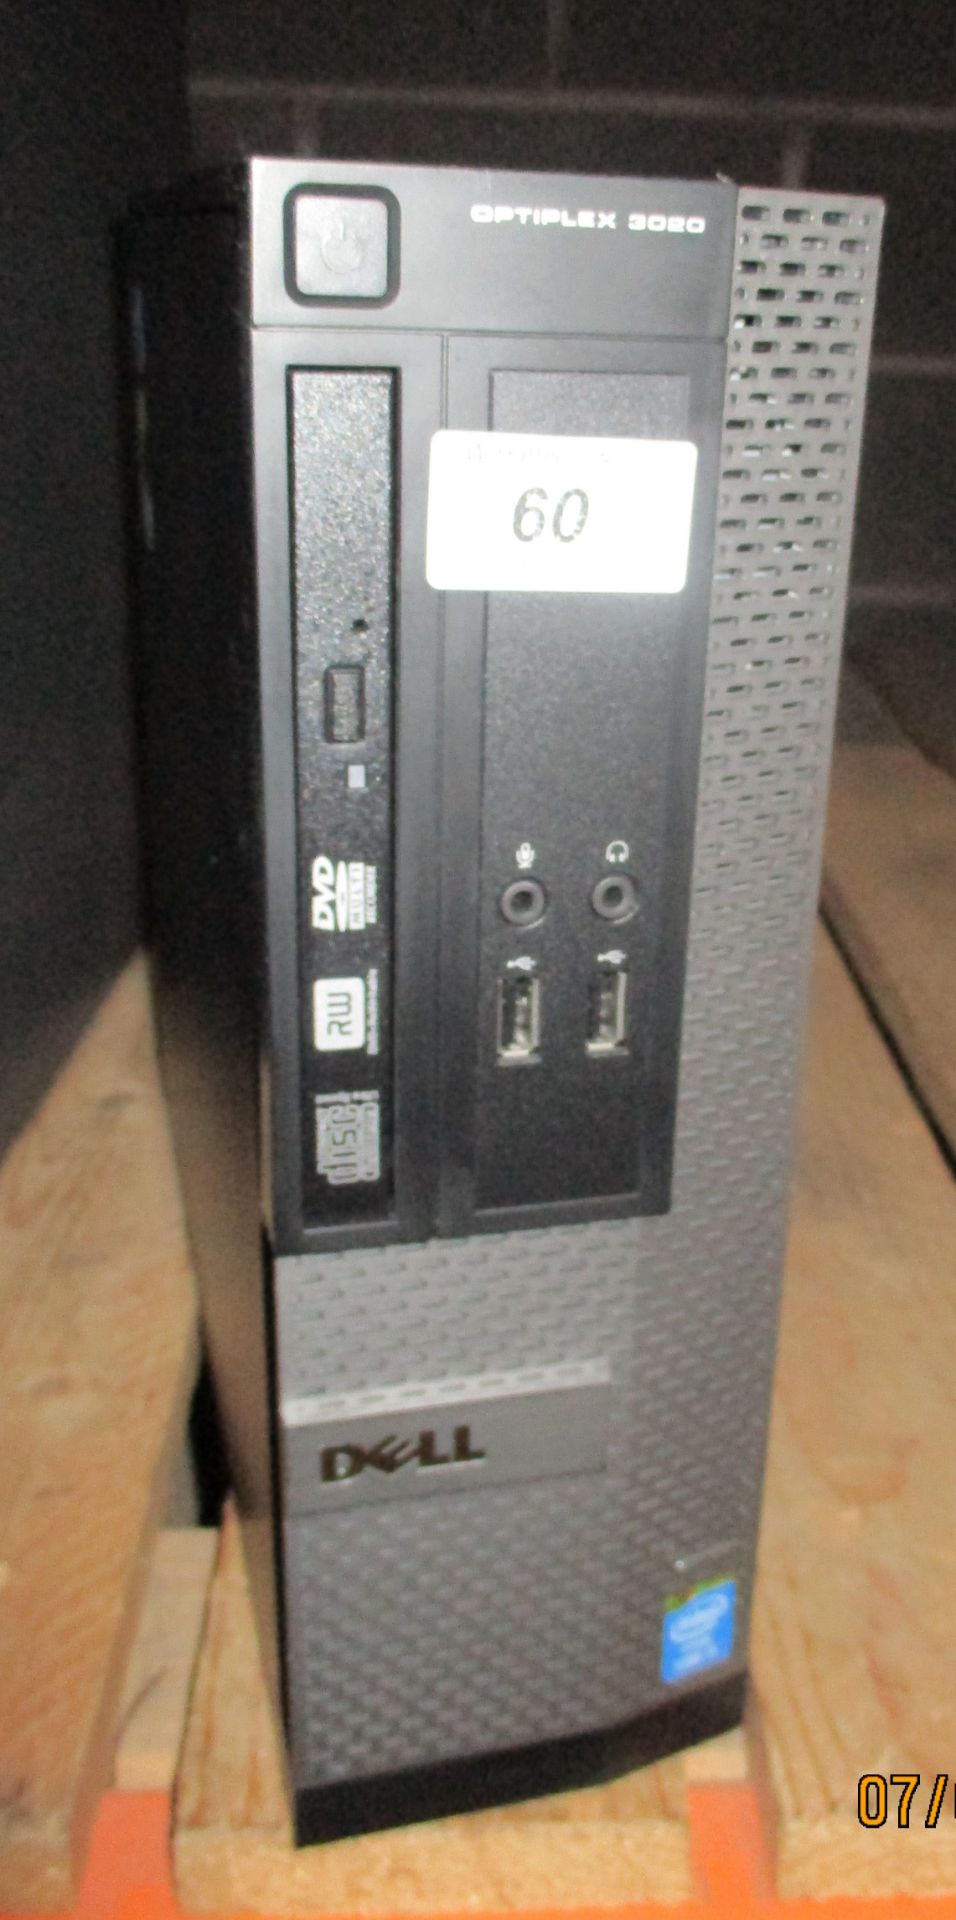 A Dell Optiplex 3020 tower computer - no power lead